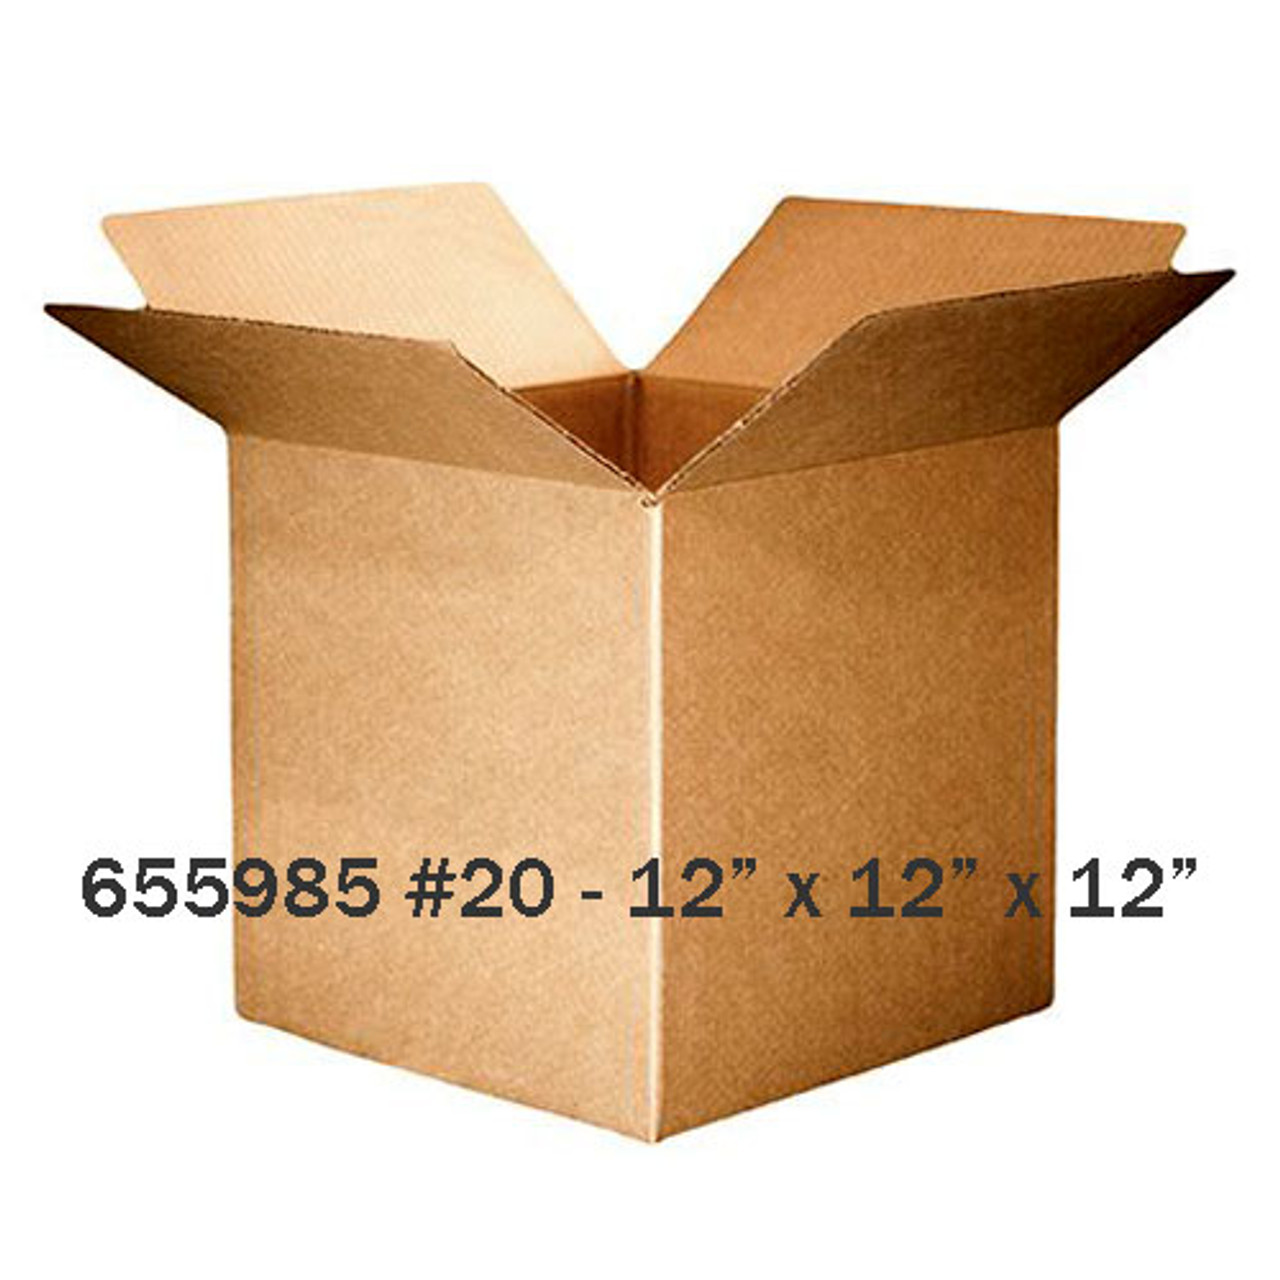 #20 - 12"w x 12"h x 12"d Corrugated Kraft Shipping Box - ea.